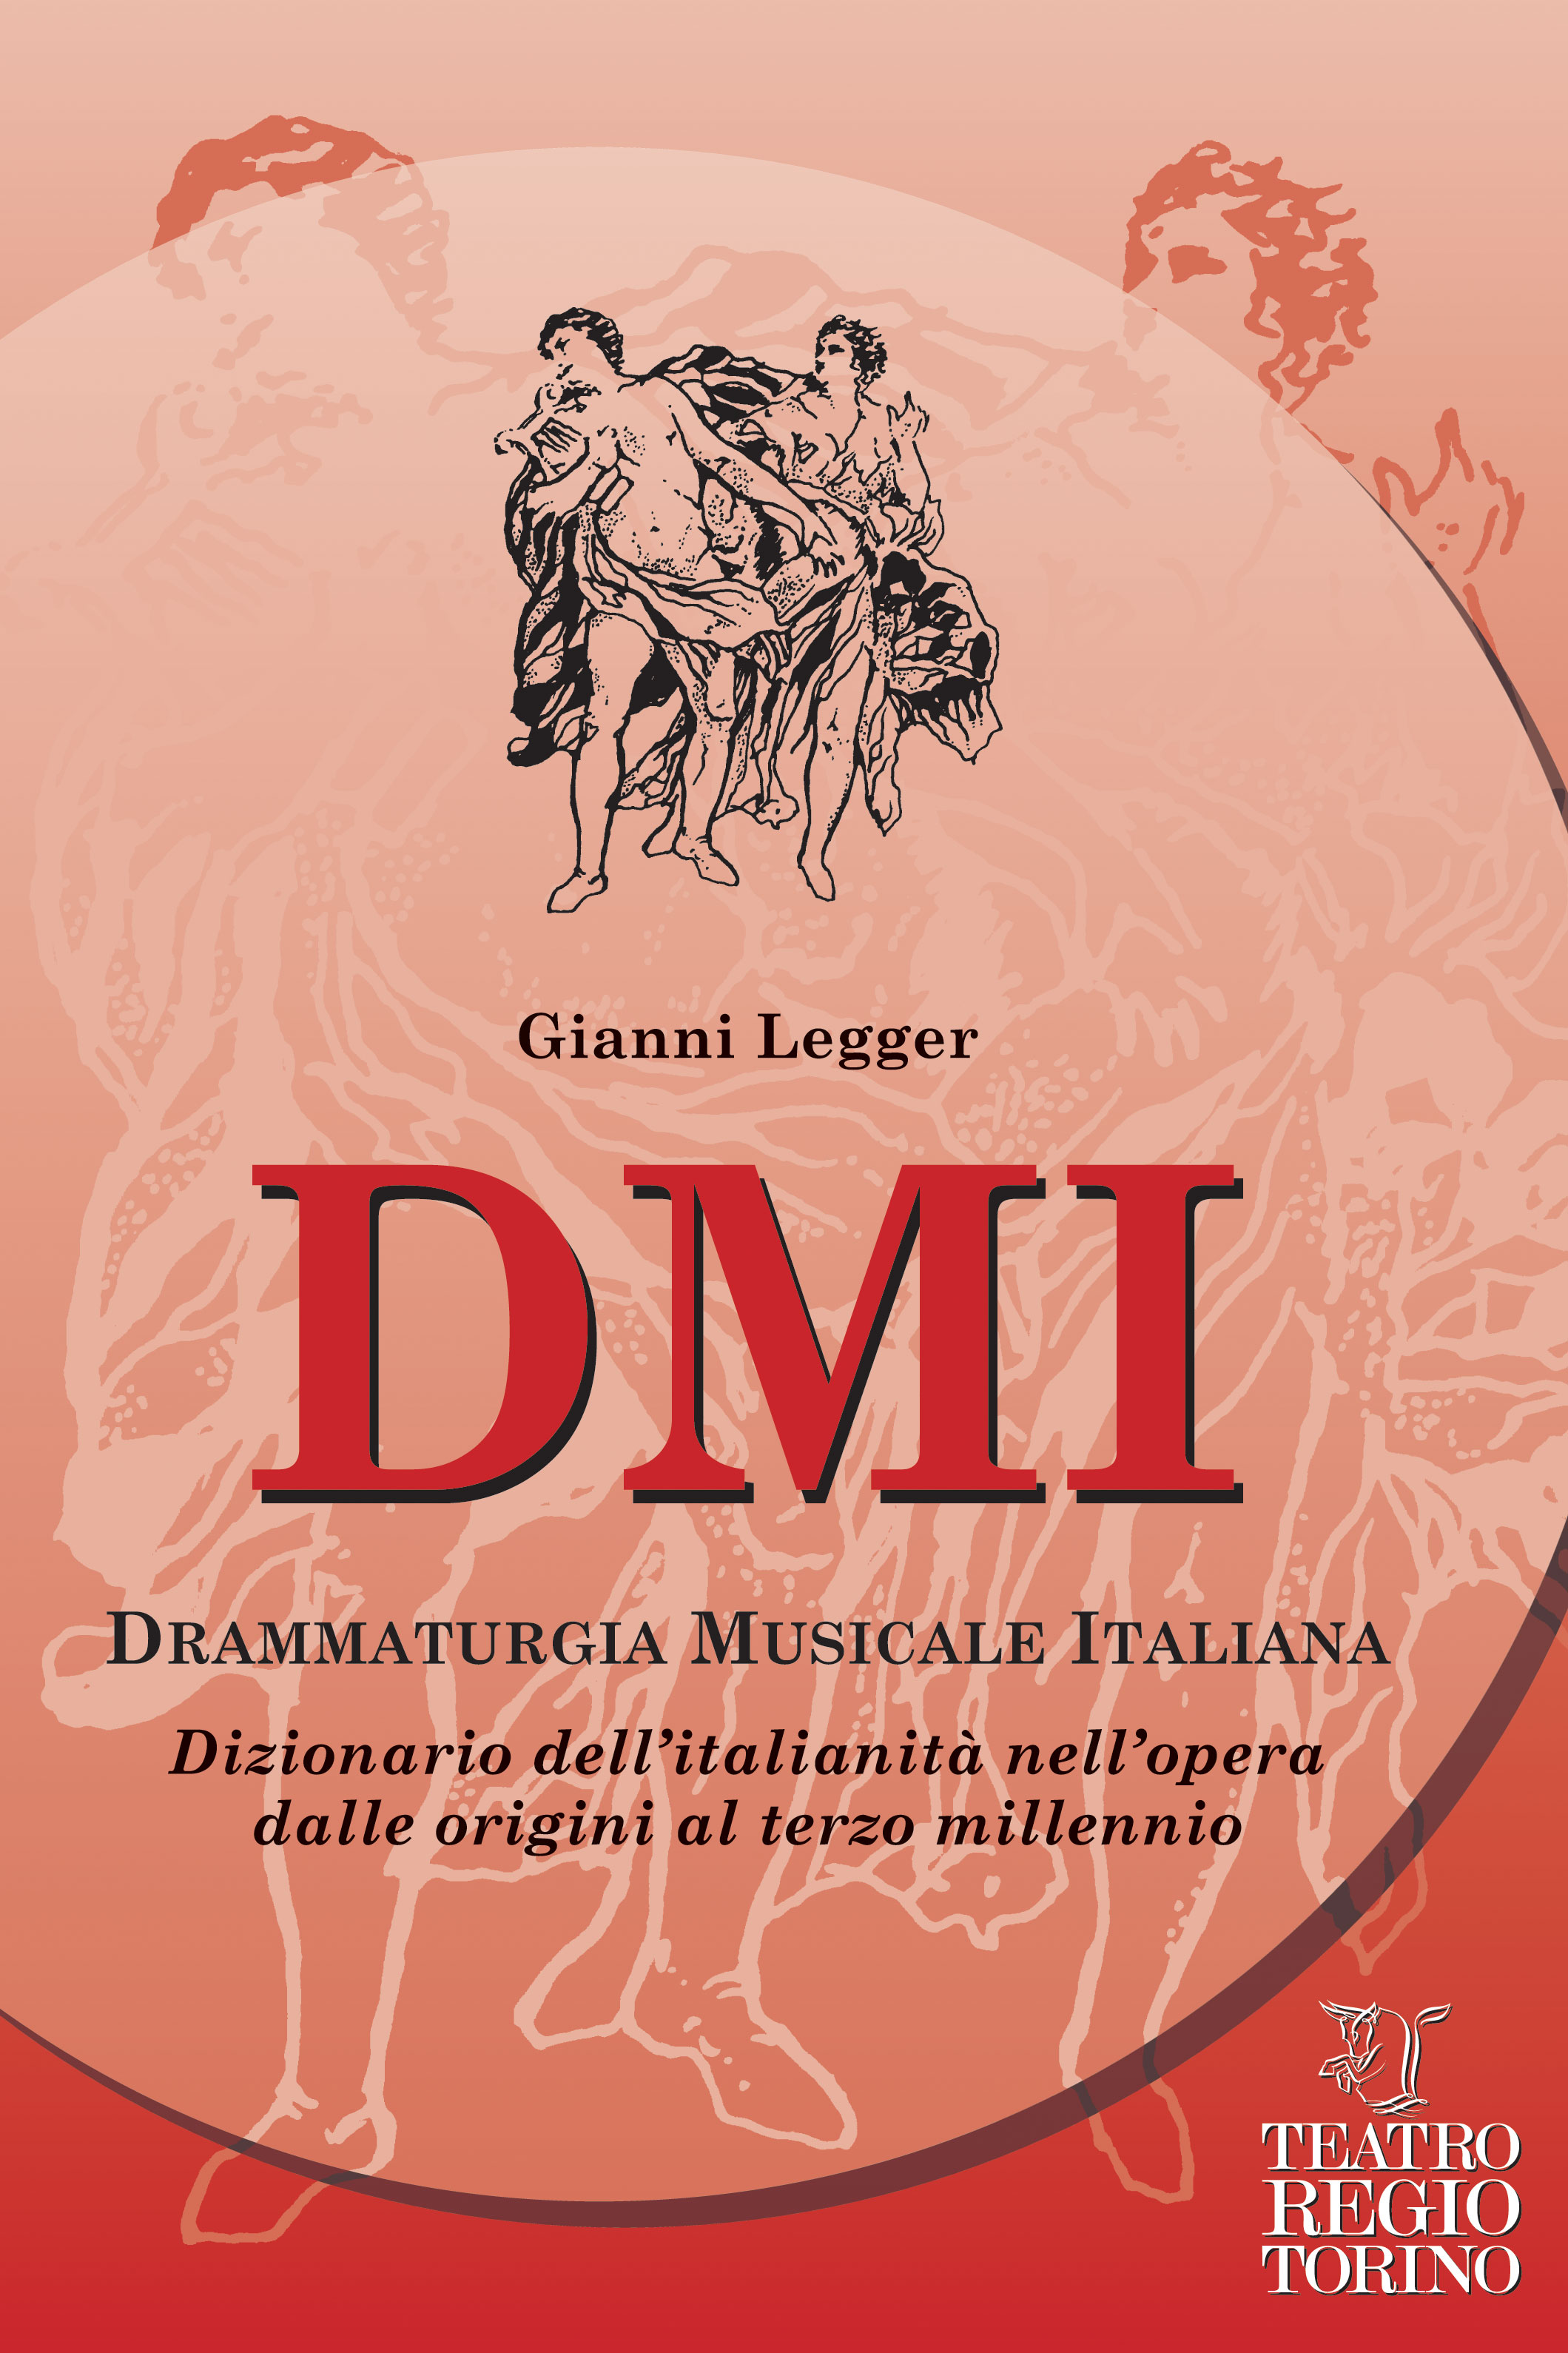 Cover of Drammaturgia Musicale Italiana by Gianni Legger